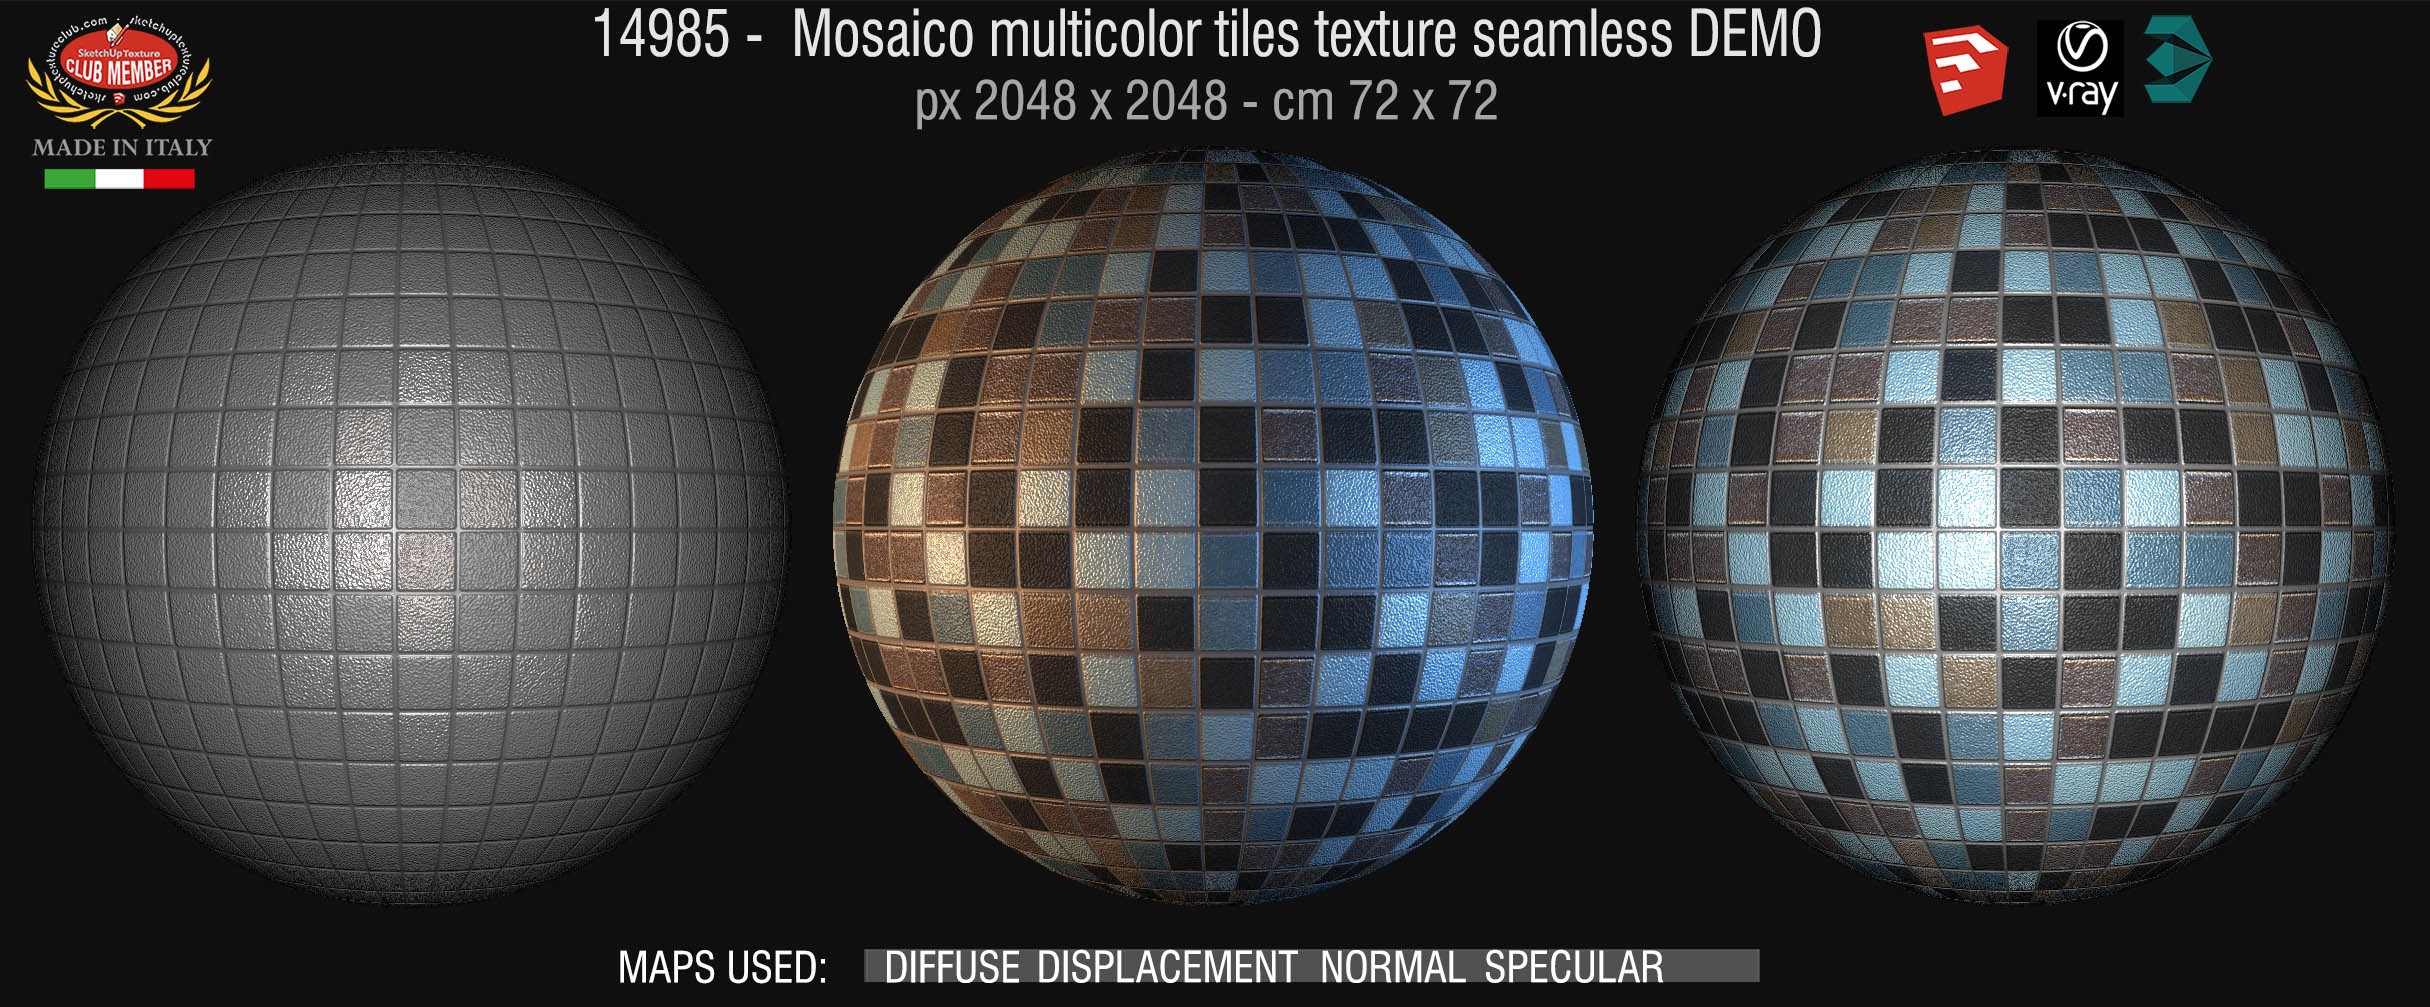 14985 Mosaico multicolor tiles texture seamless + maps DEMO